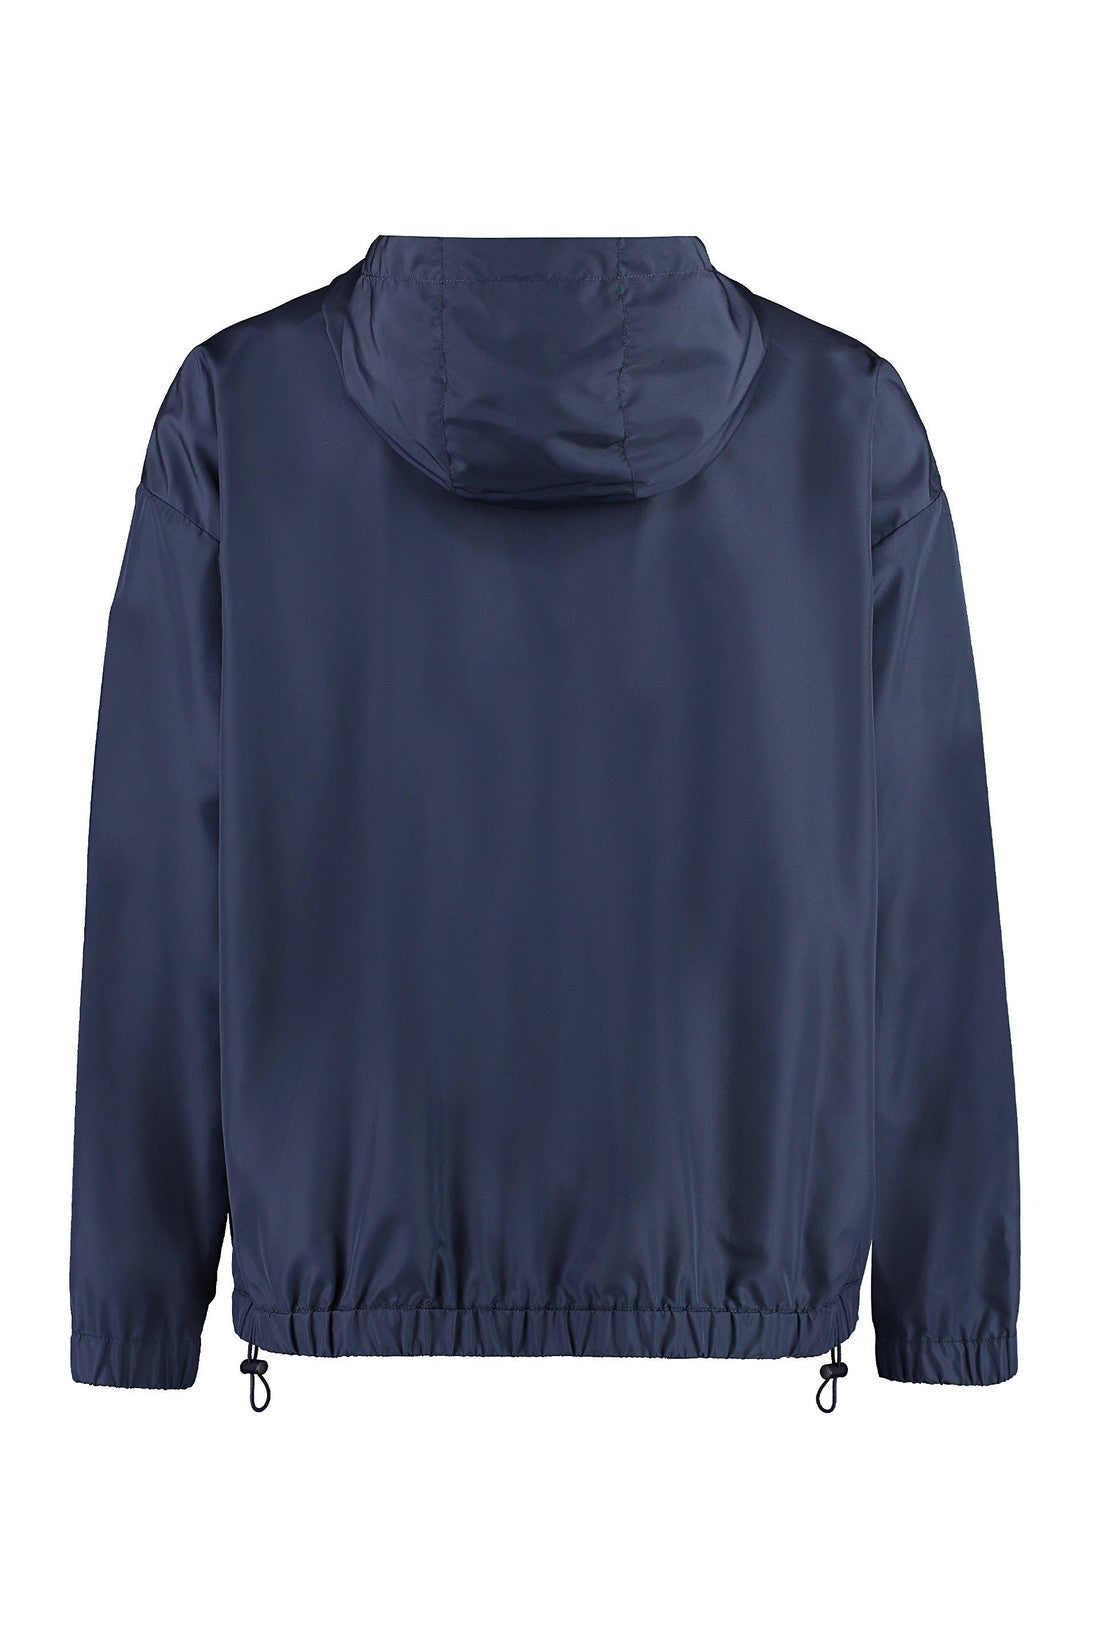 Dolce & Gabbana-OUTLET-SALE-Nylon windbreaker-jacket-ARCHIVIST